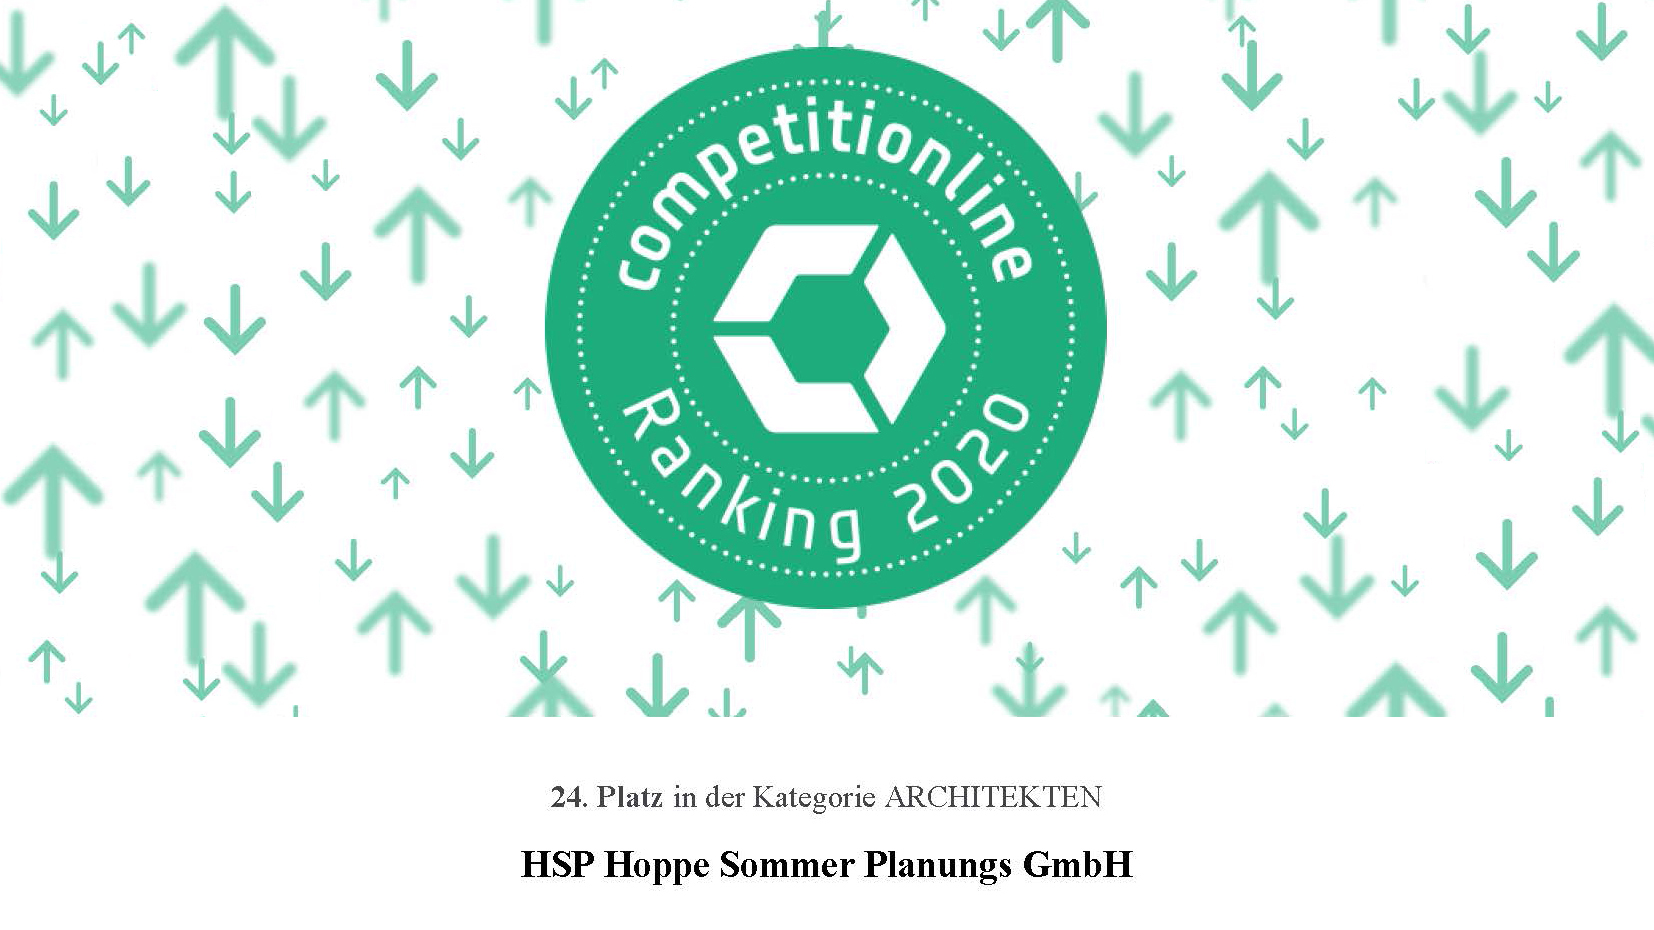 HSP Hoppe Sommer Planungs GmbH Architektur | competitionline 24. Platz 2020